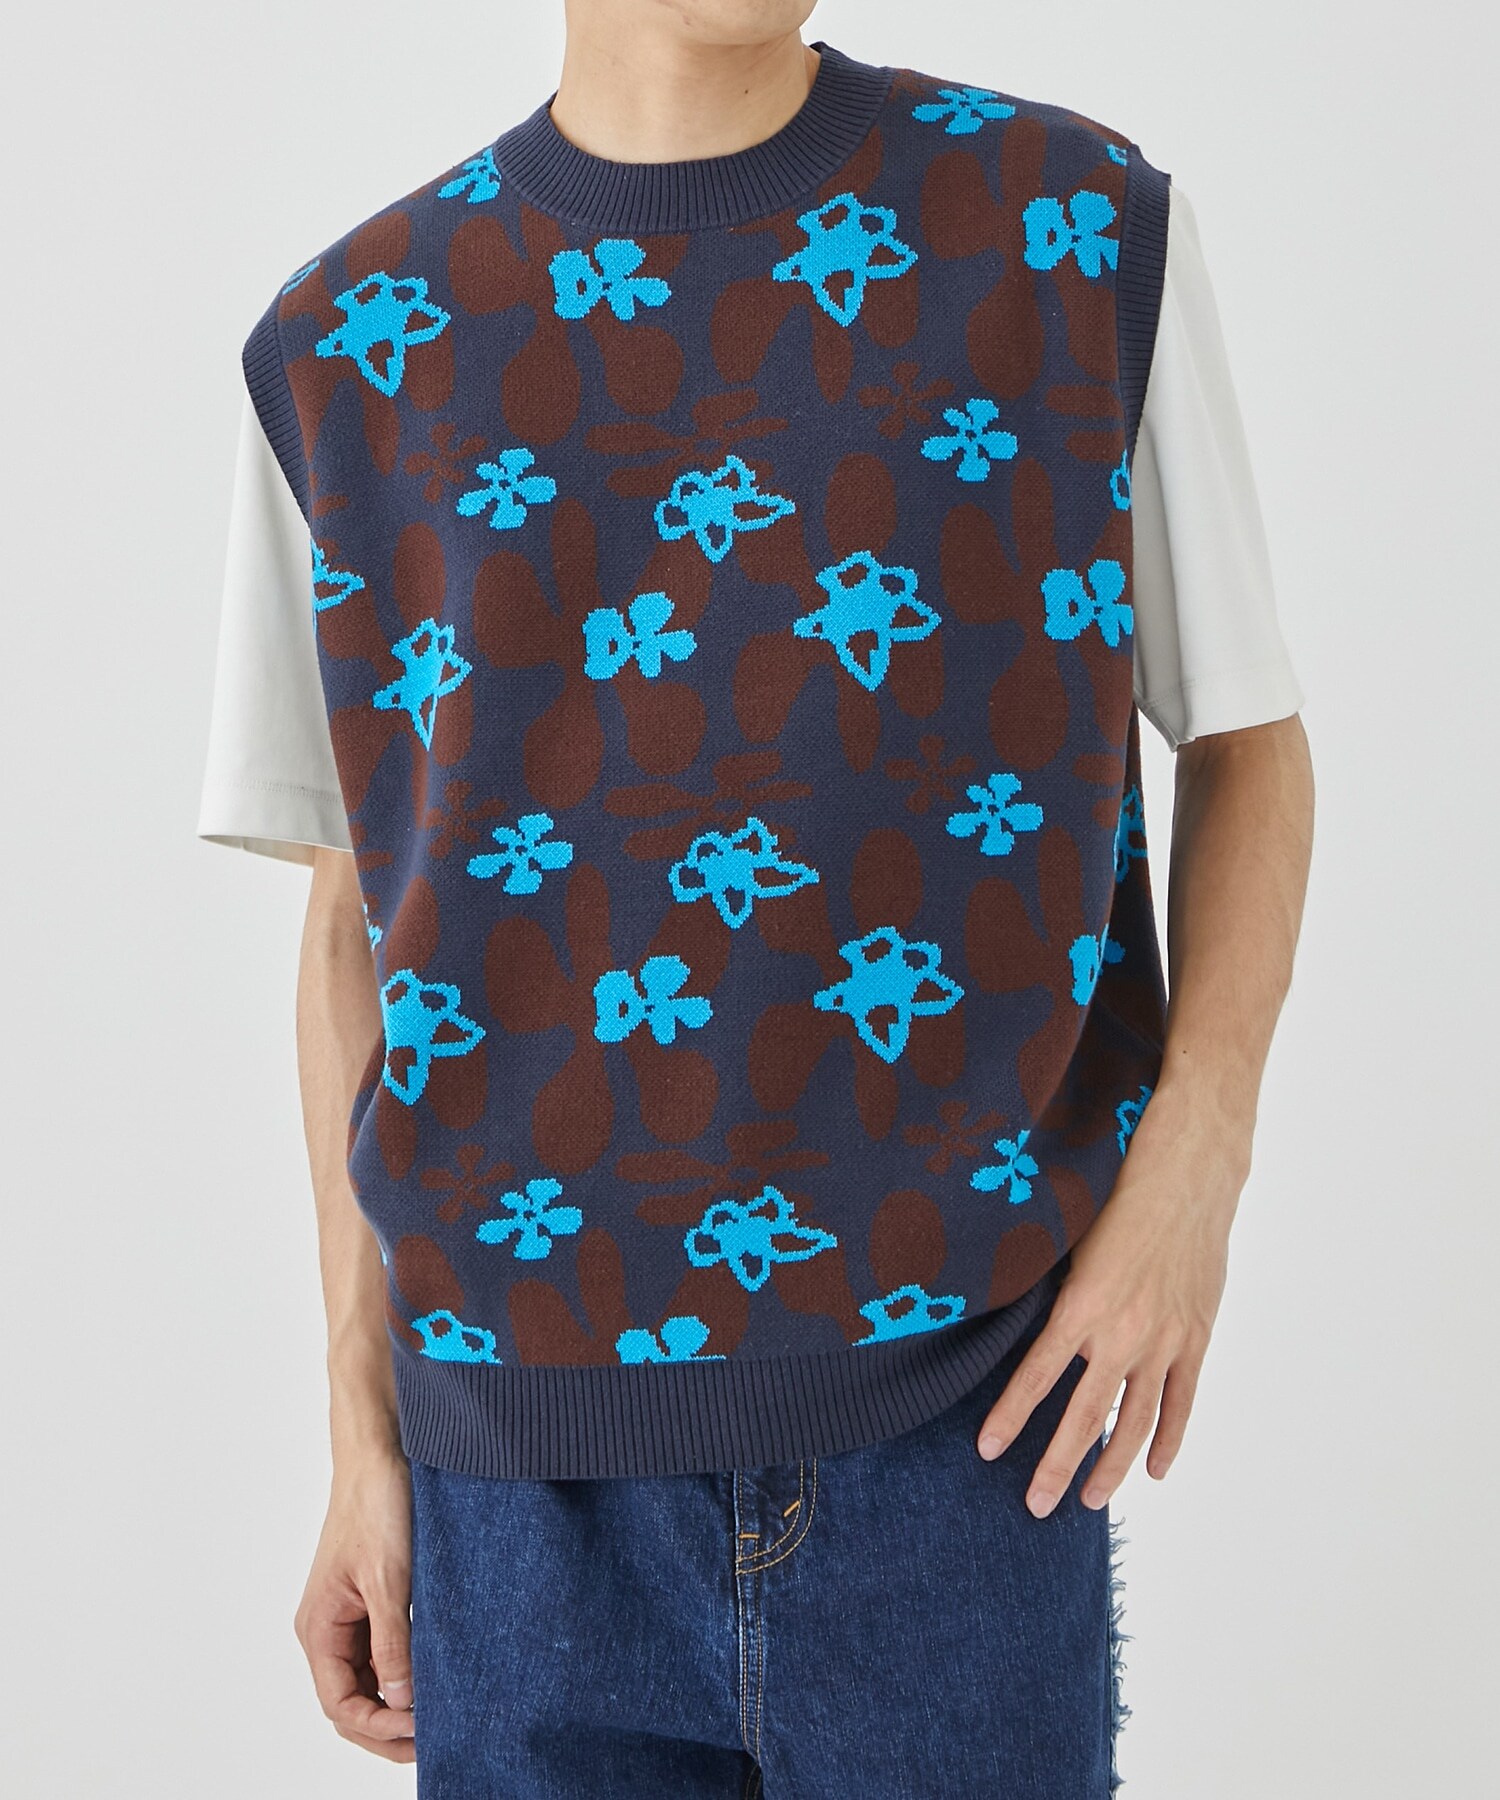 Flower camo knit  vest